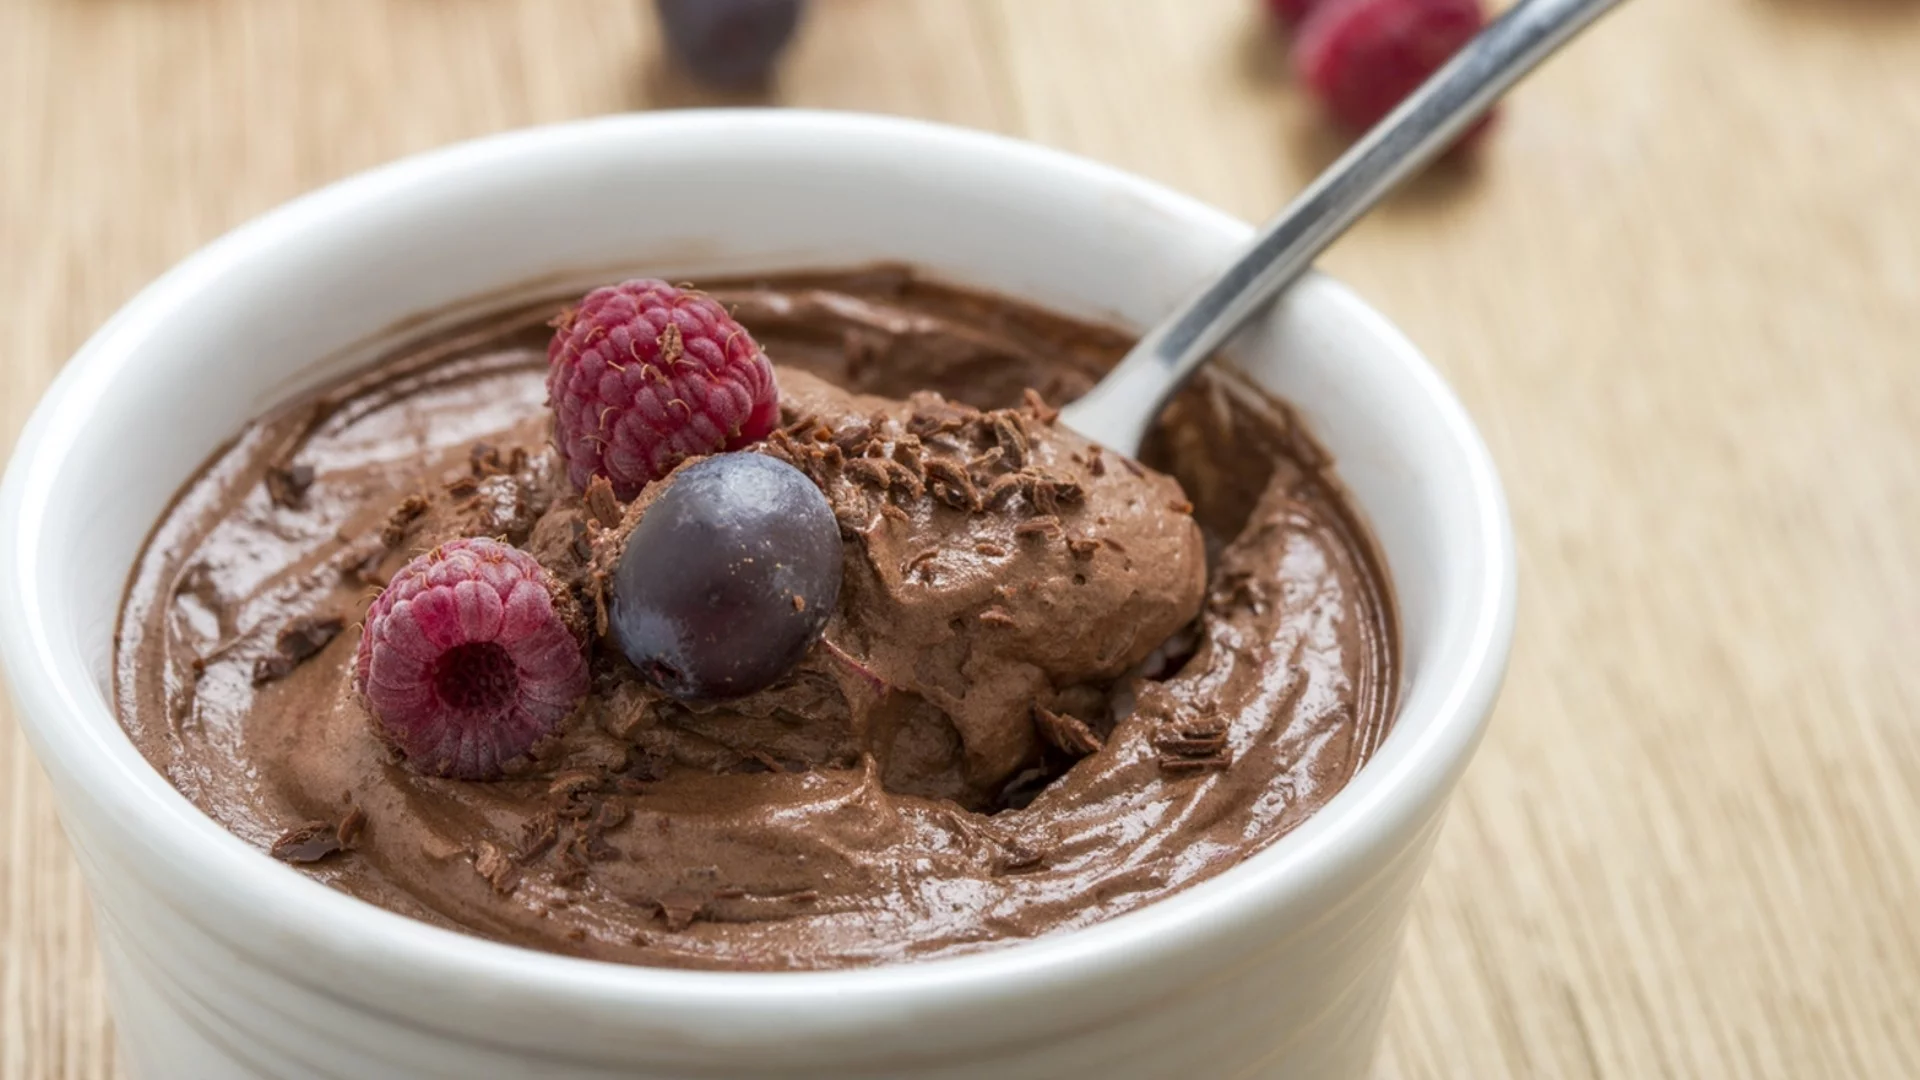 Страхотен десерт: Неустоим шоколадов пудинг